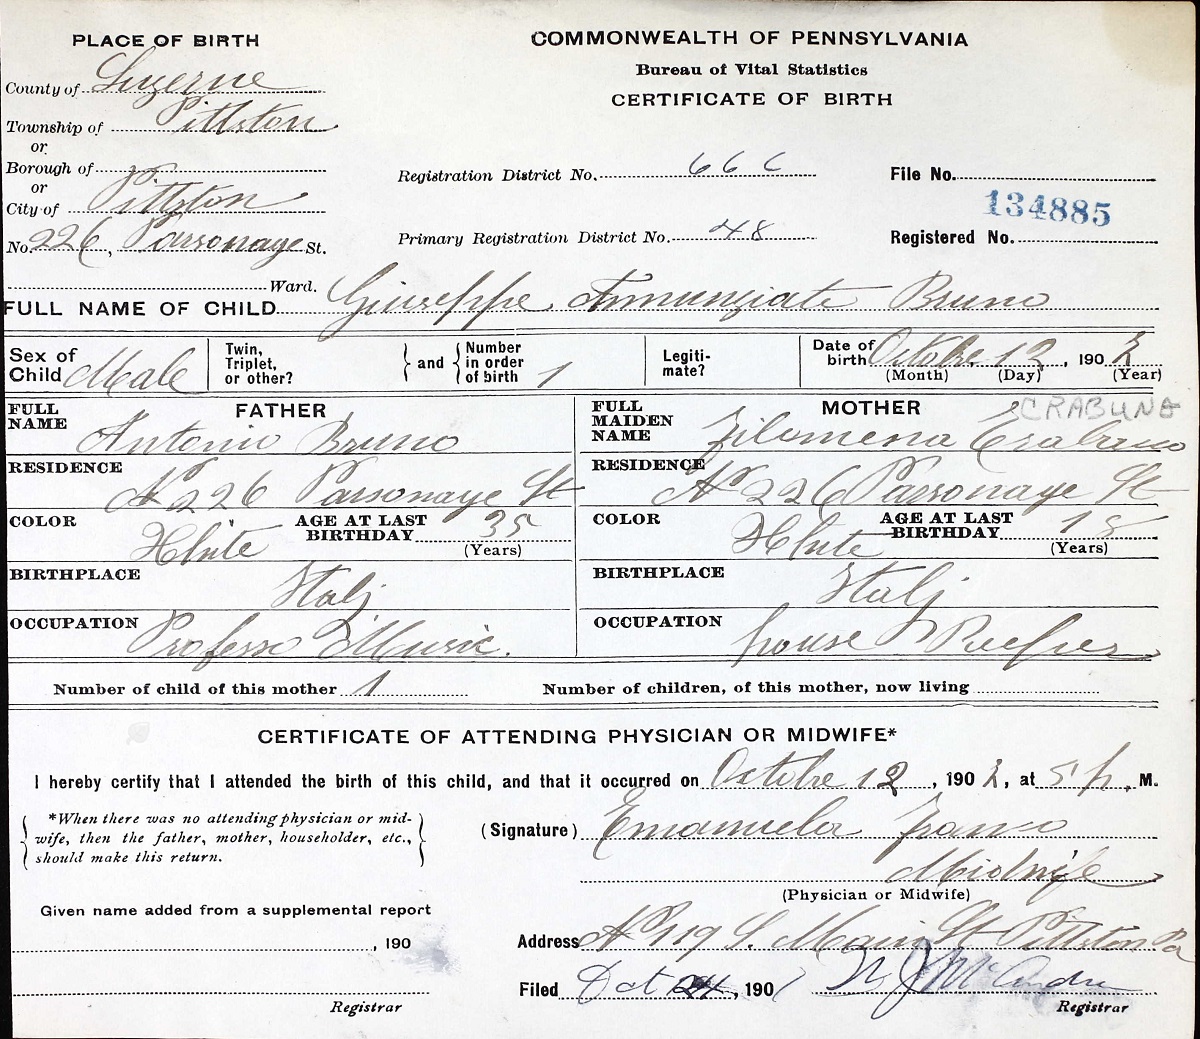 Joseph Bruno Birth Certificate